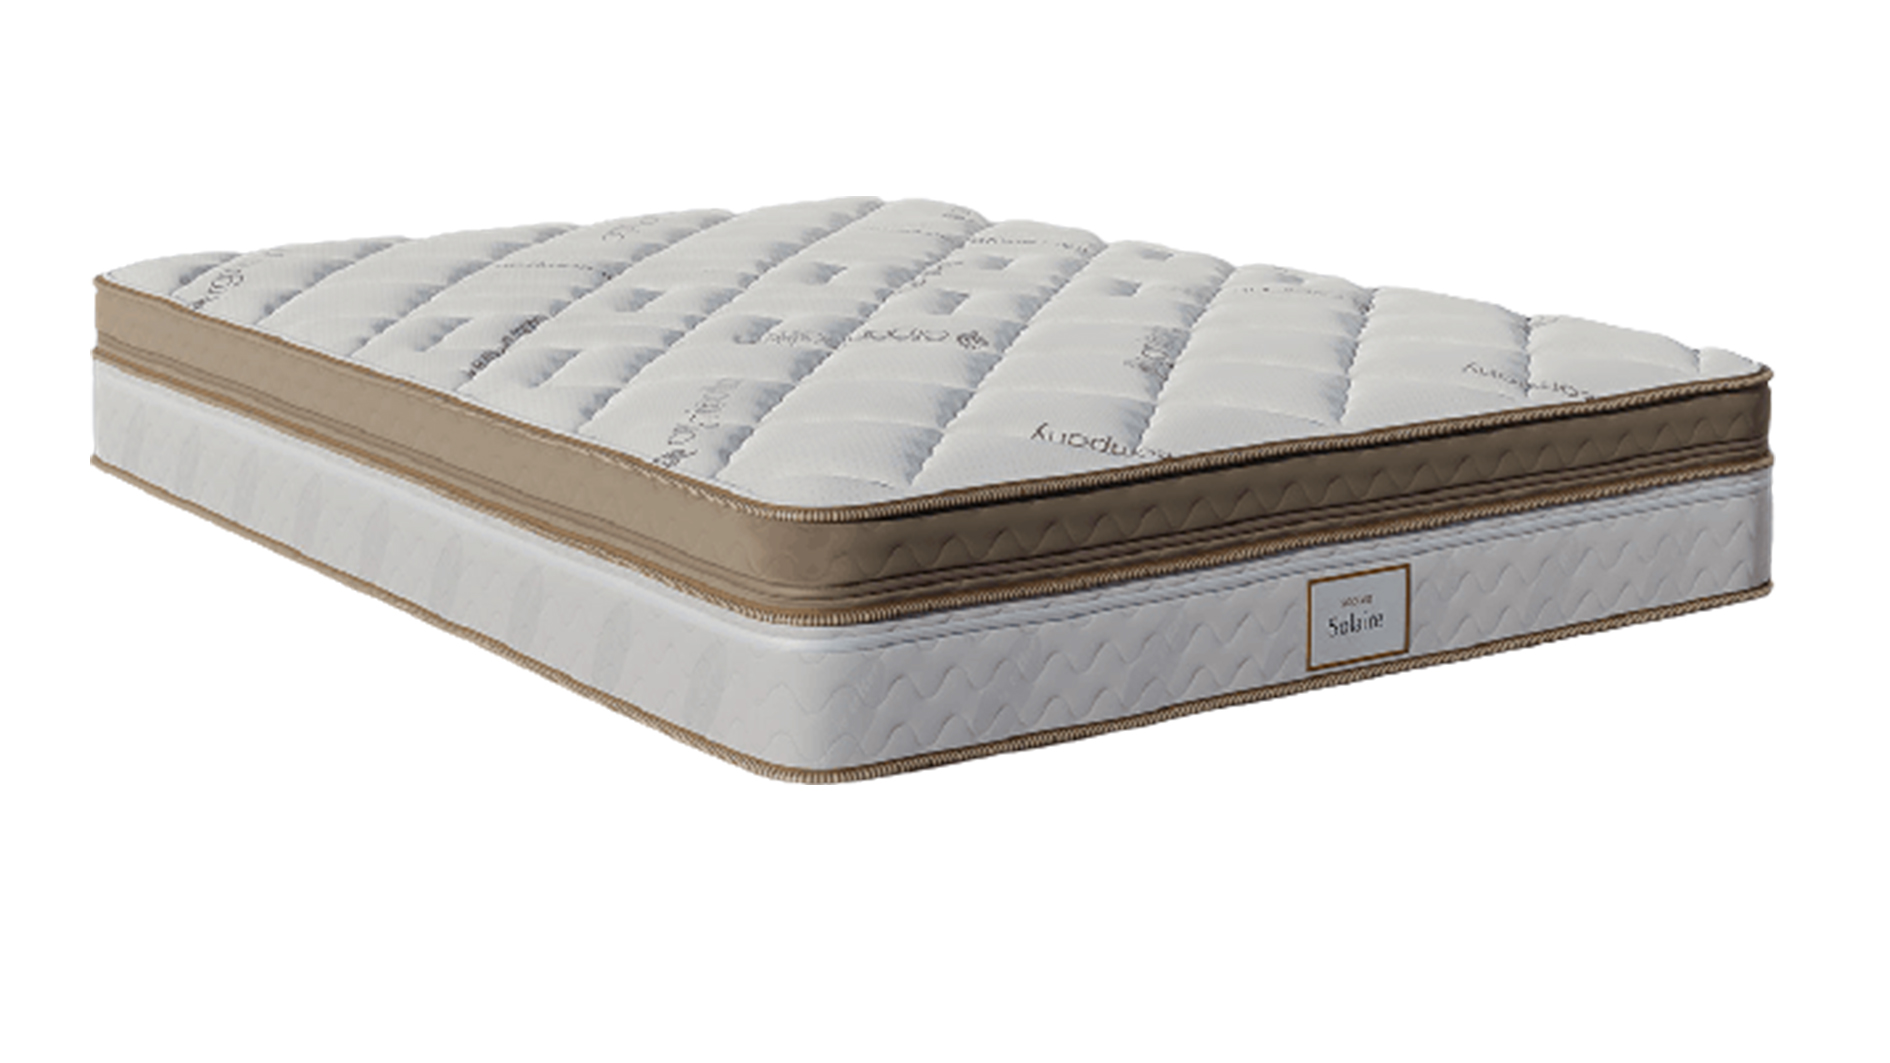 Best smart beds and smart mattress: The Saatva Solaire Adjustable Mattress